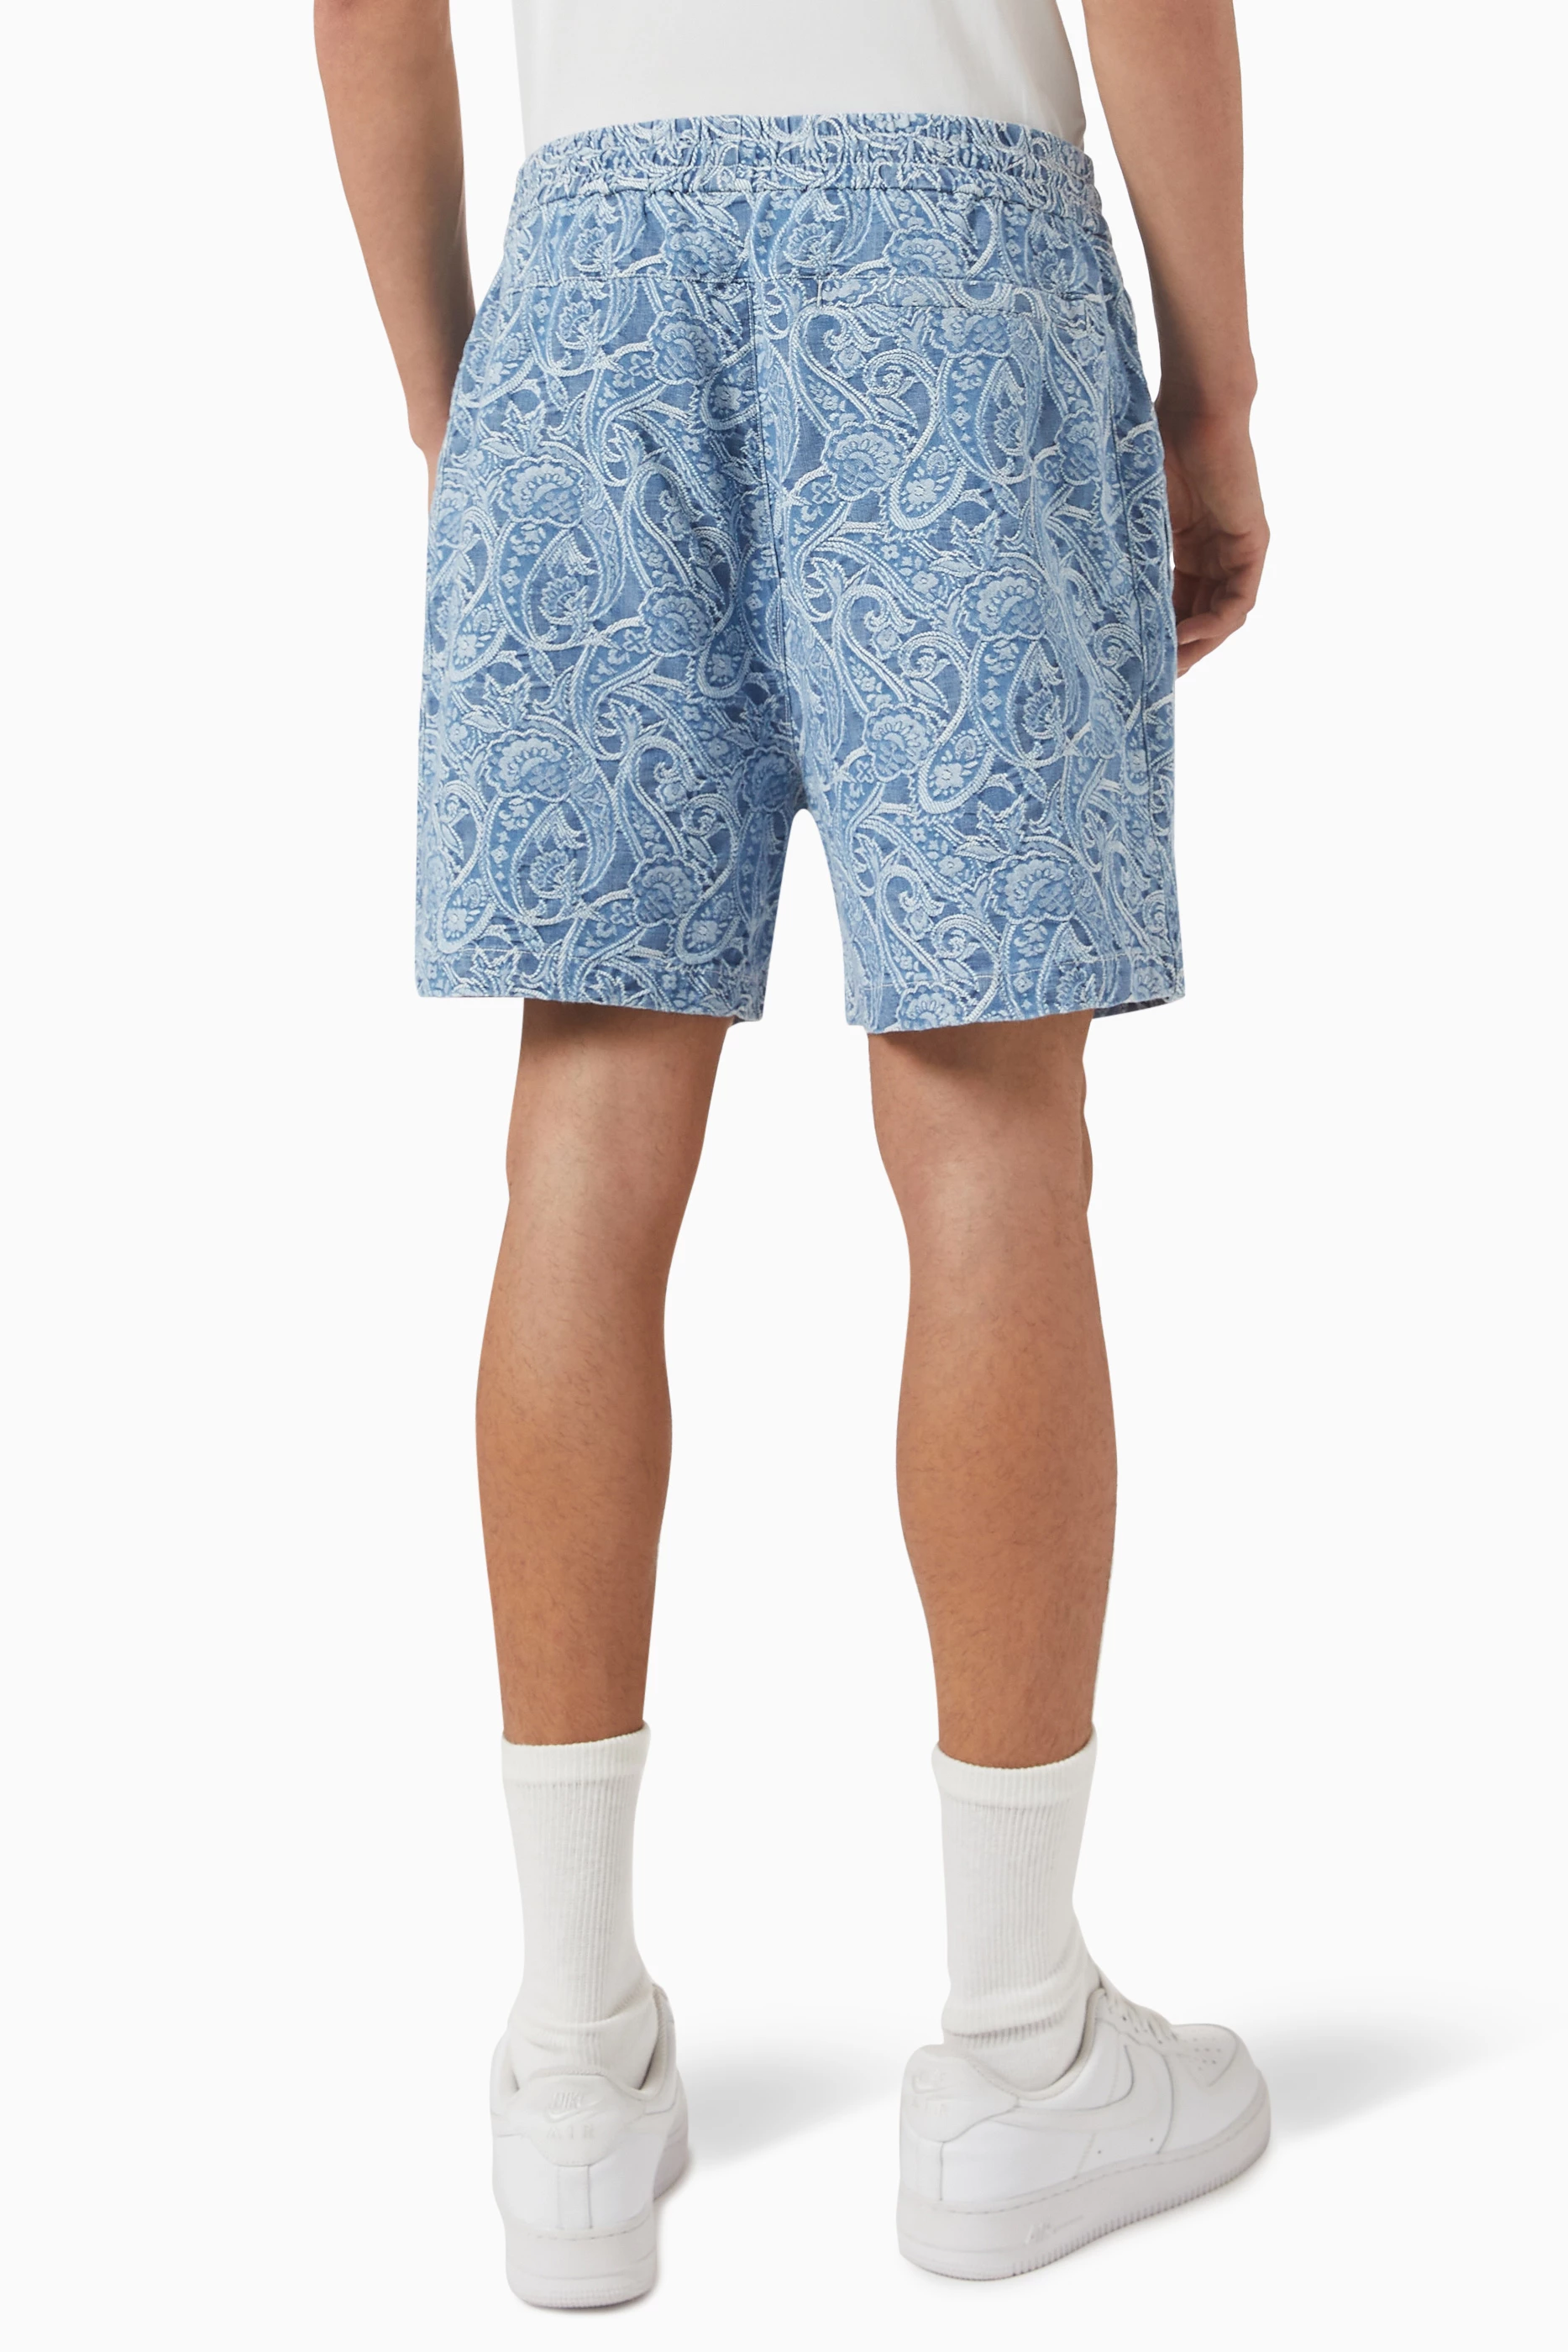 Buy Kith Blue Japanese Paisley Shorts for Men in Kuwait | Ounass